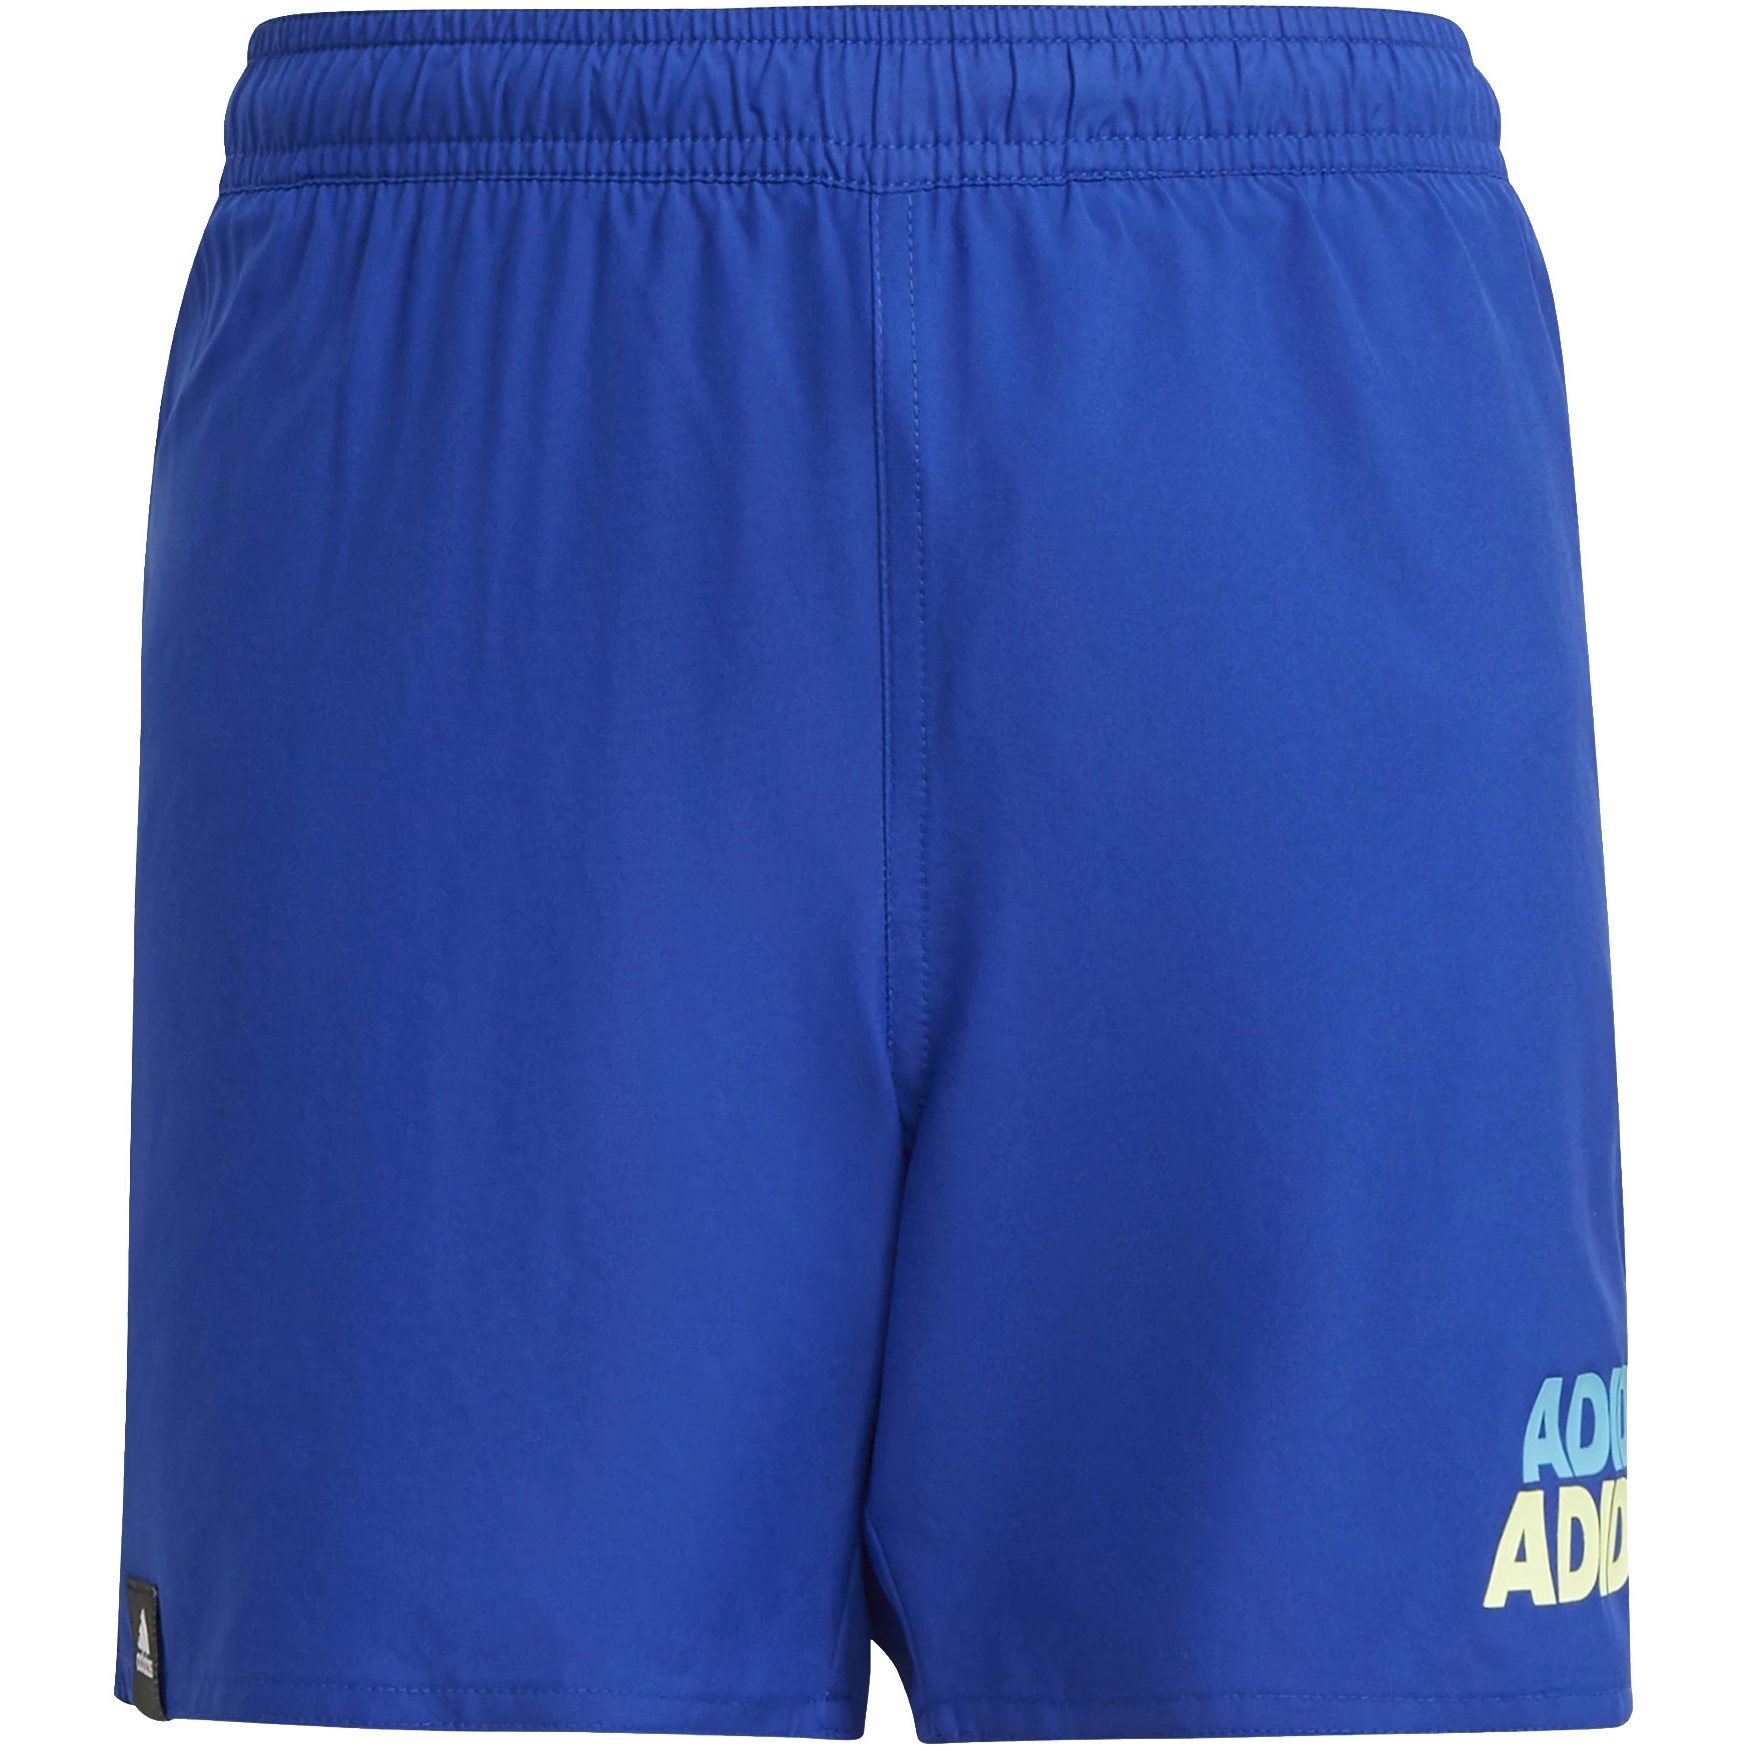 Bild von adidas Kinder Lineage Bade-Shorts - royal blue/hi-res yellow GN5898